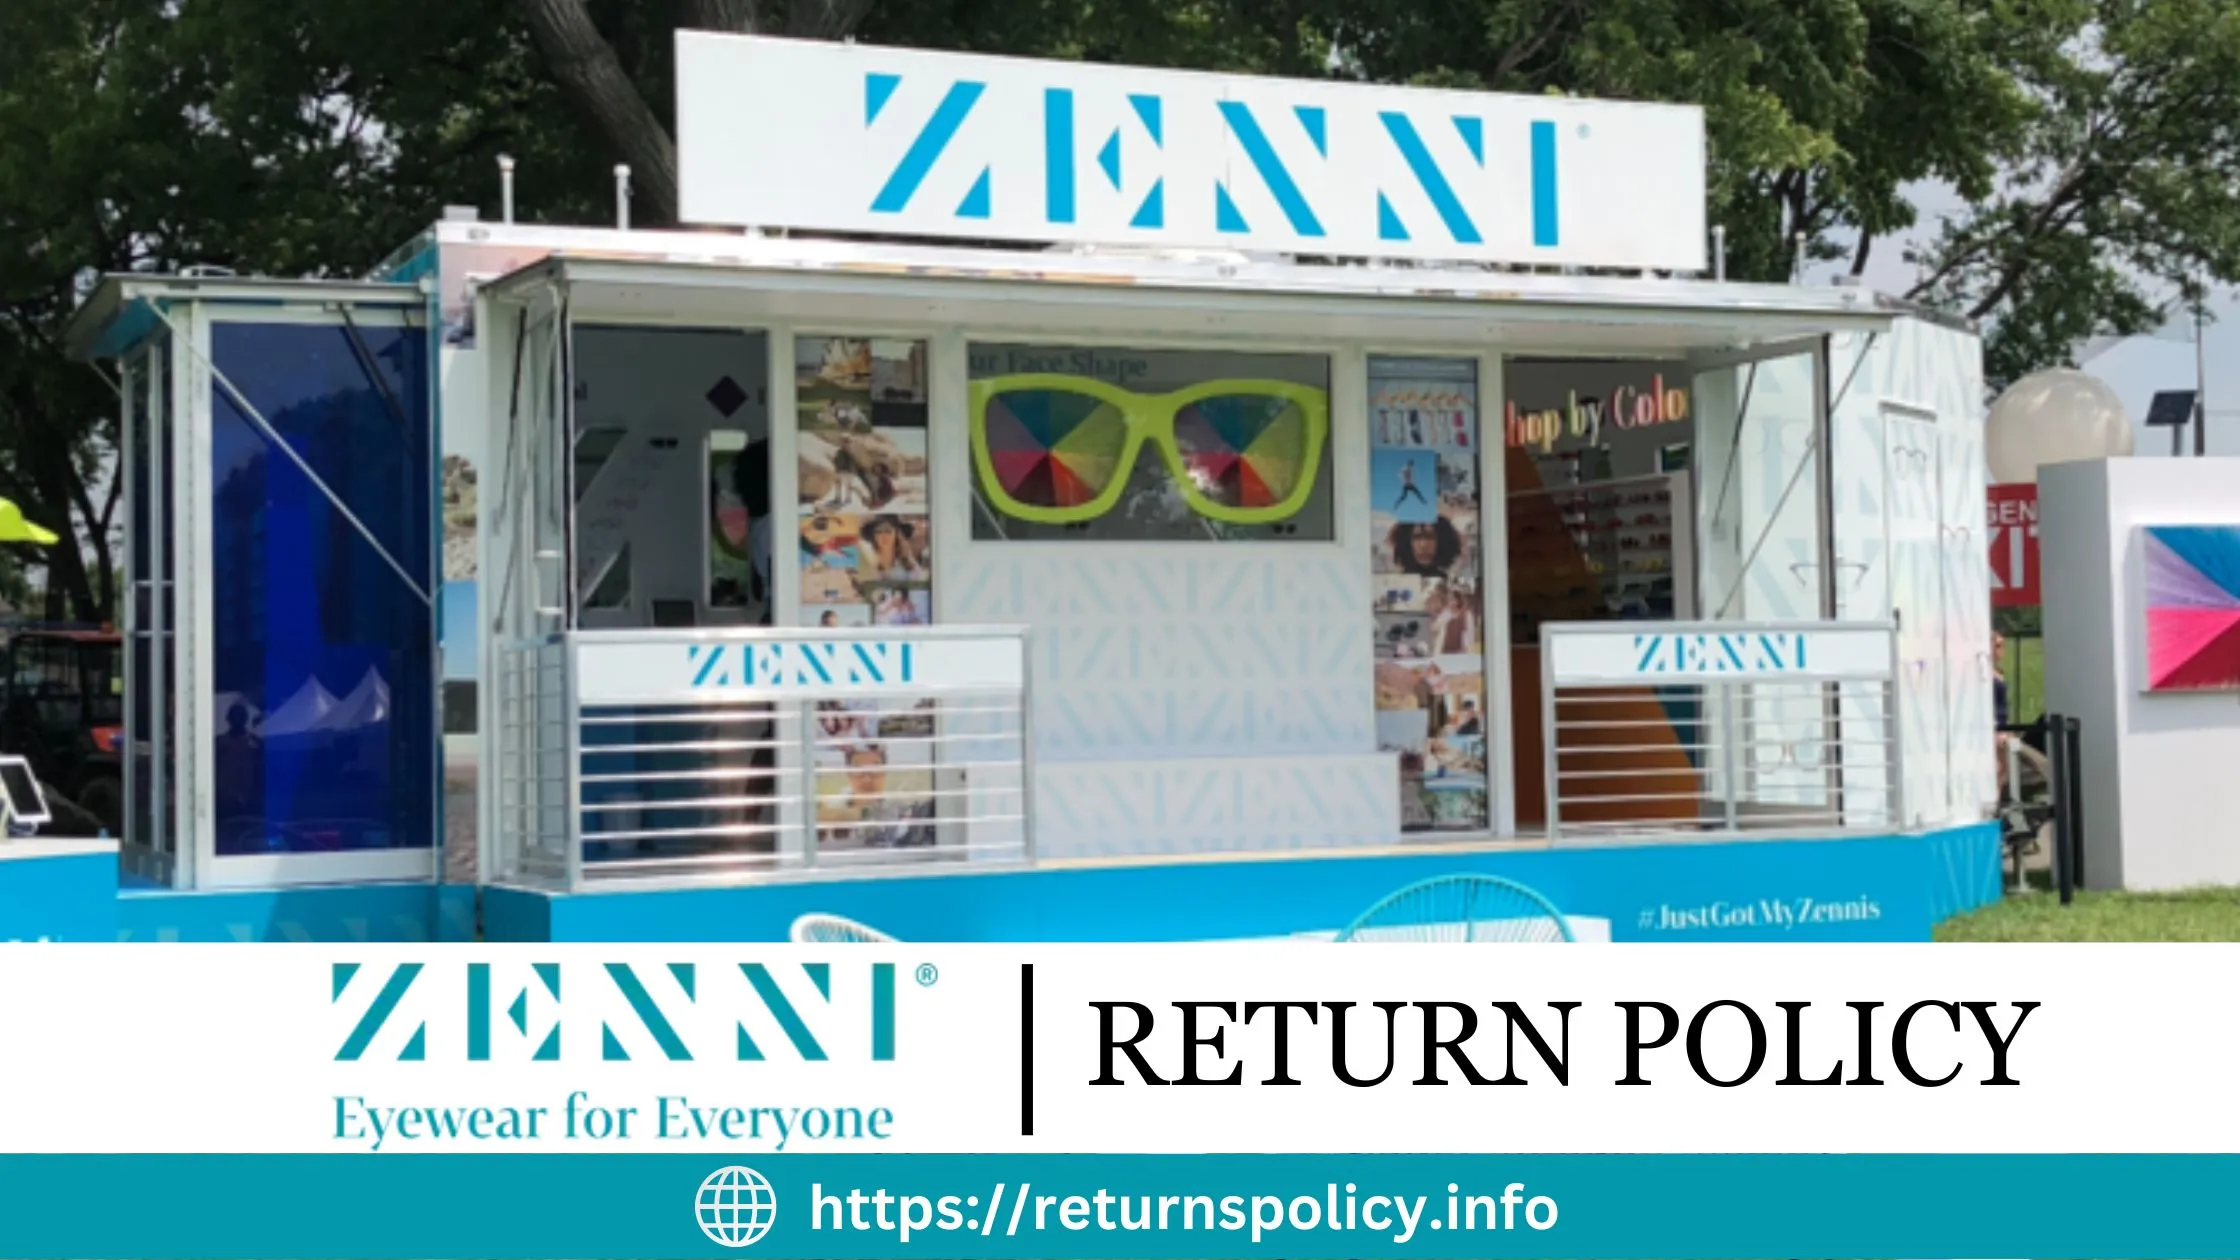 Zenni Return Policy